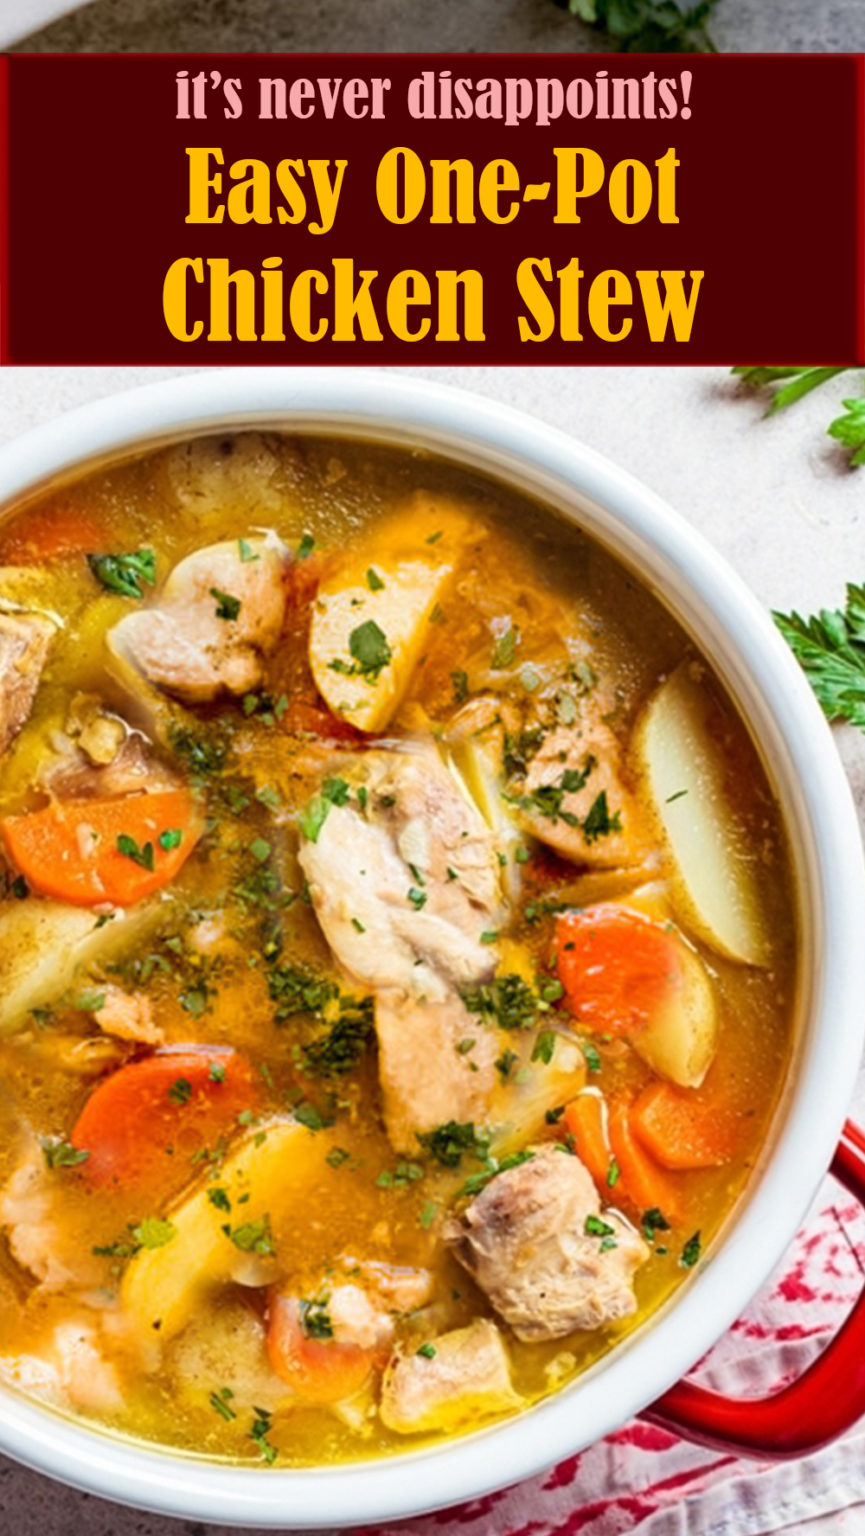 Easy One-Pot Chicken Stew – Reserveamana